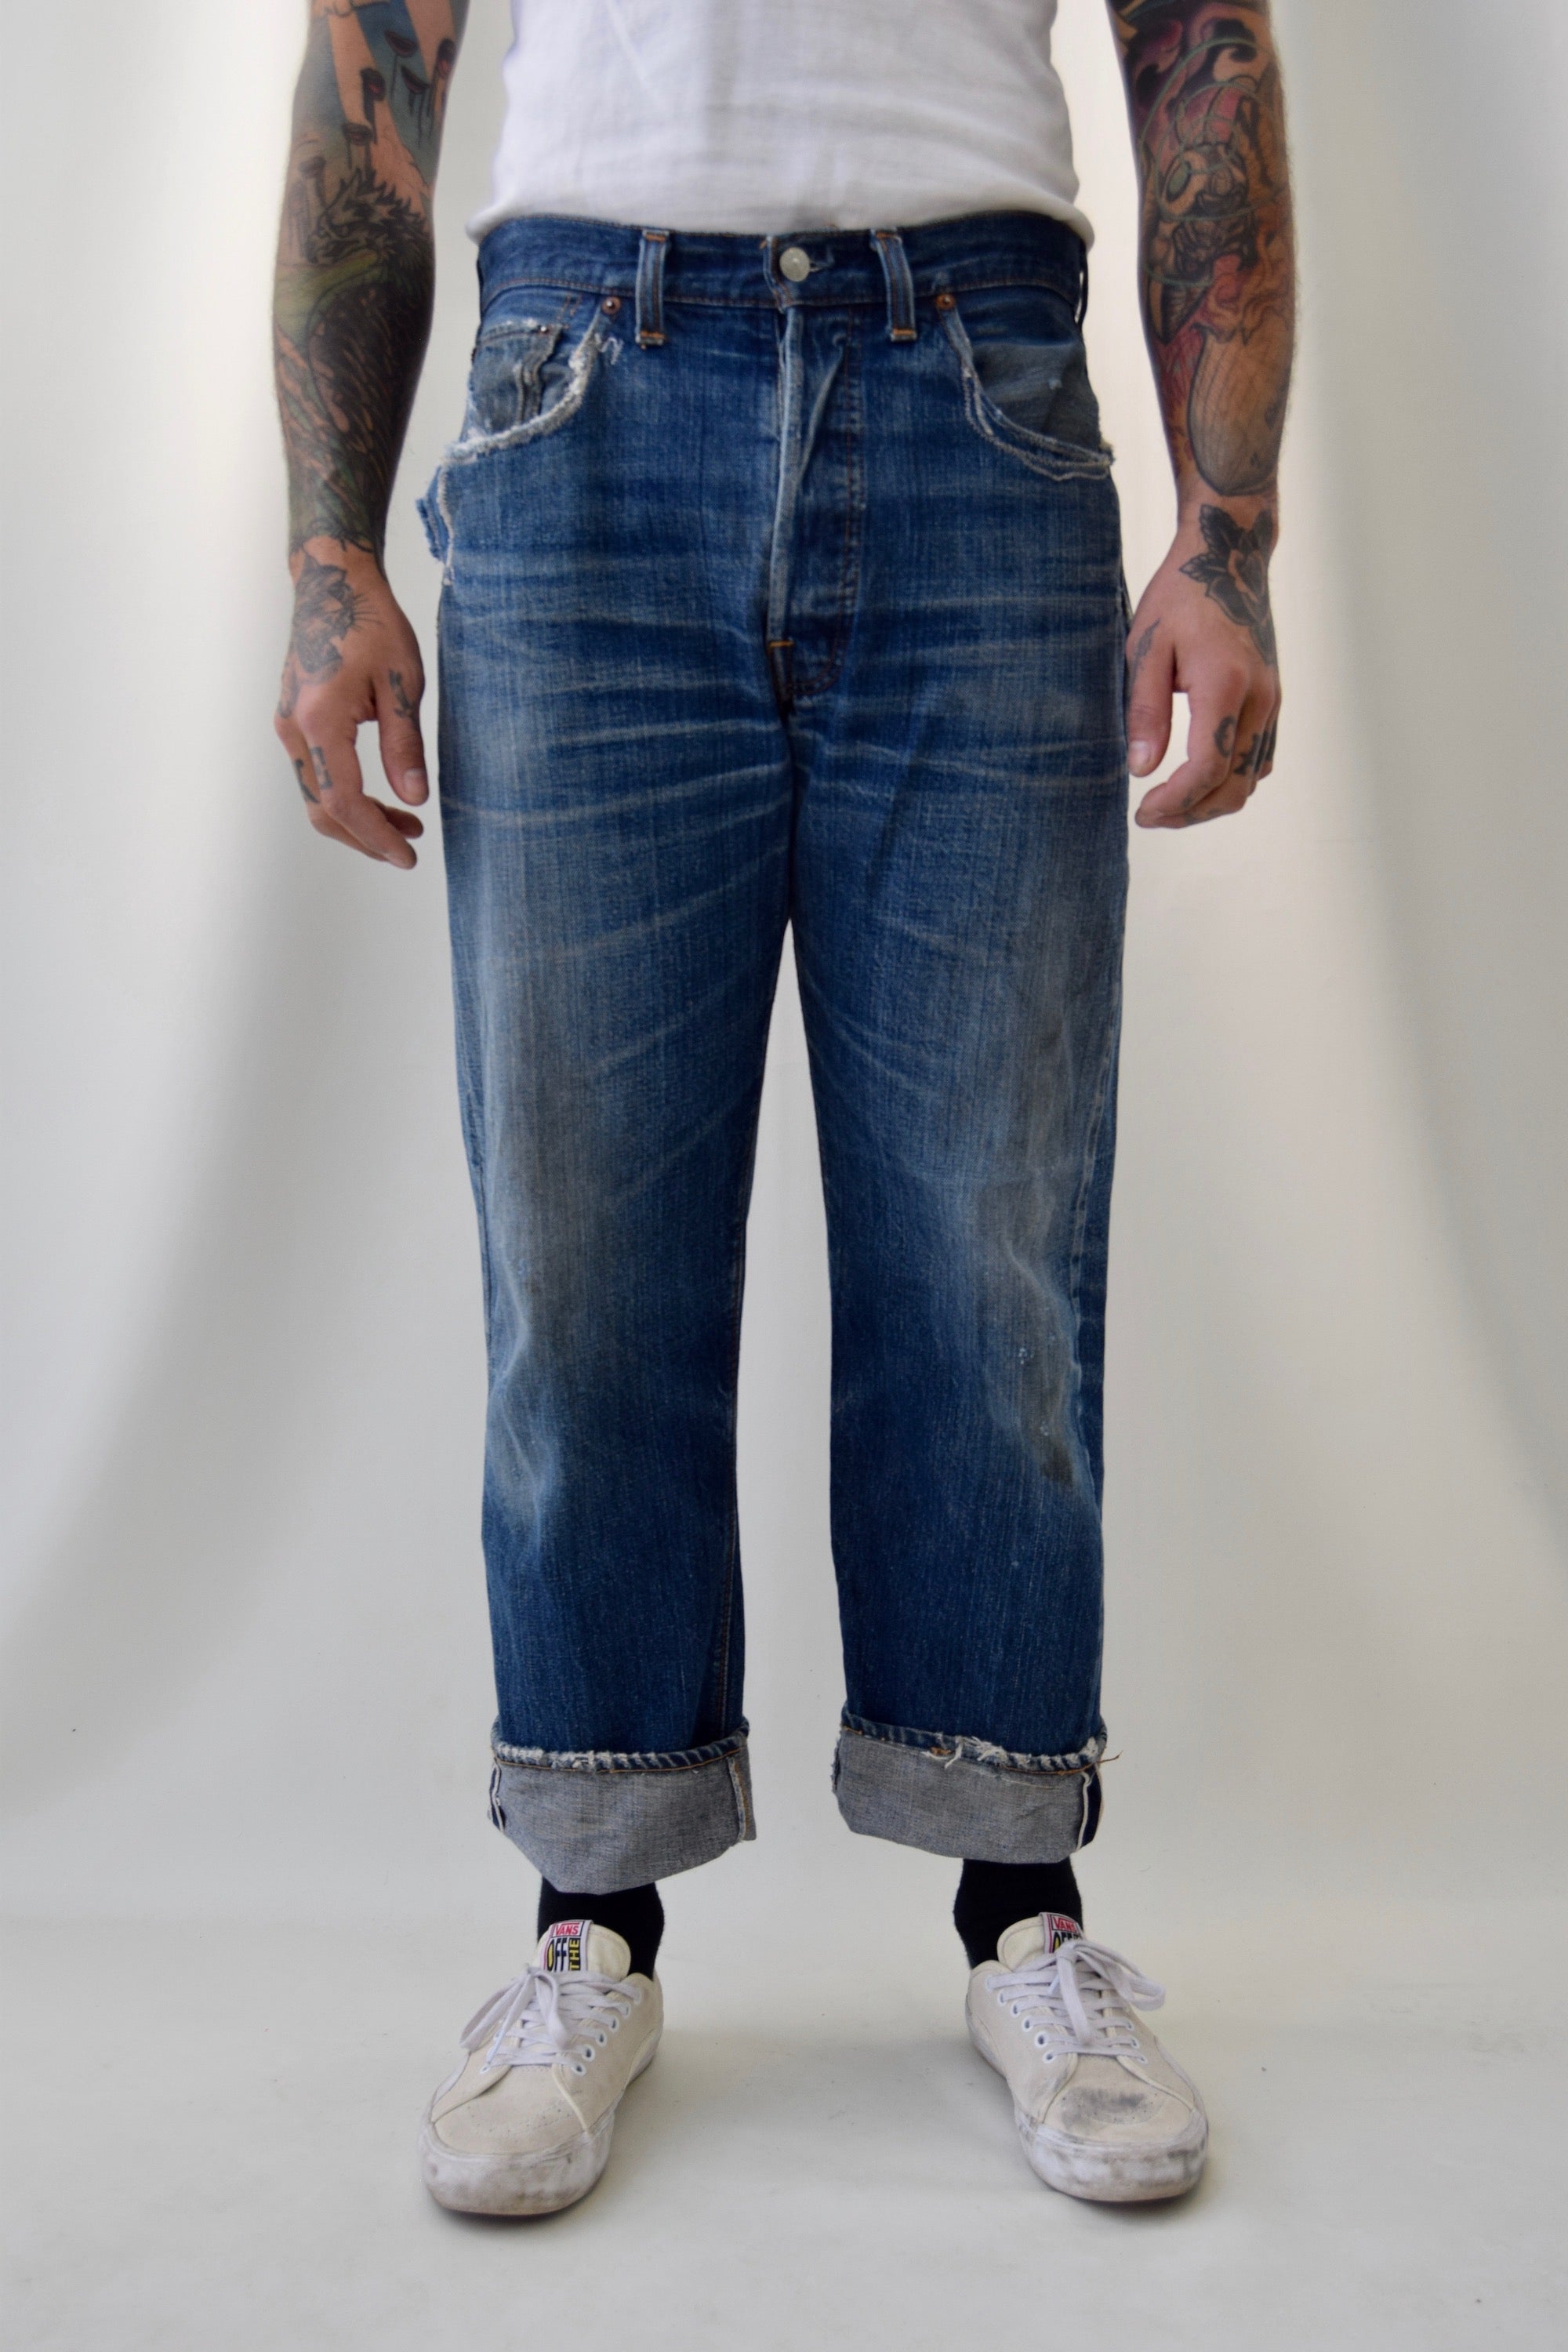 501 selvedge jeans